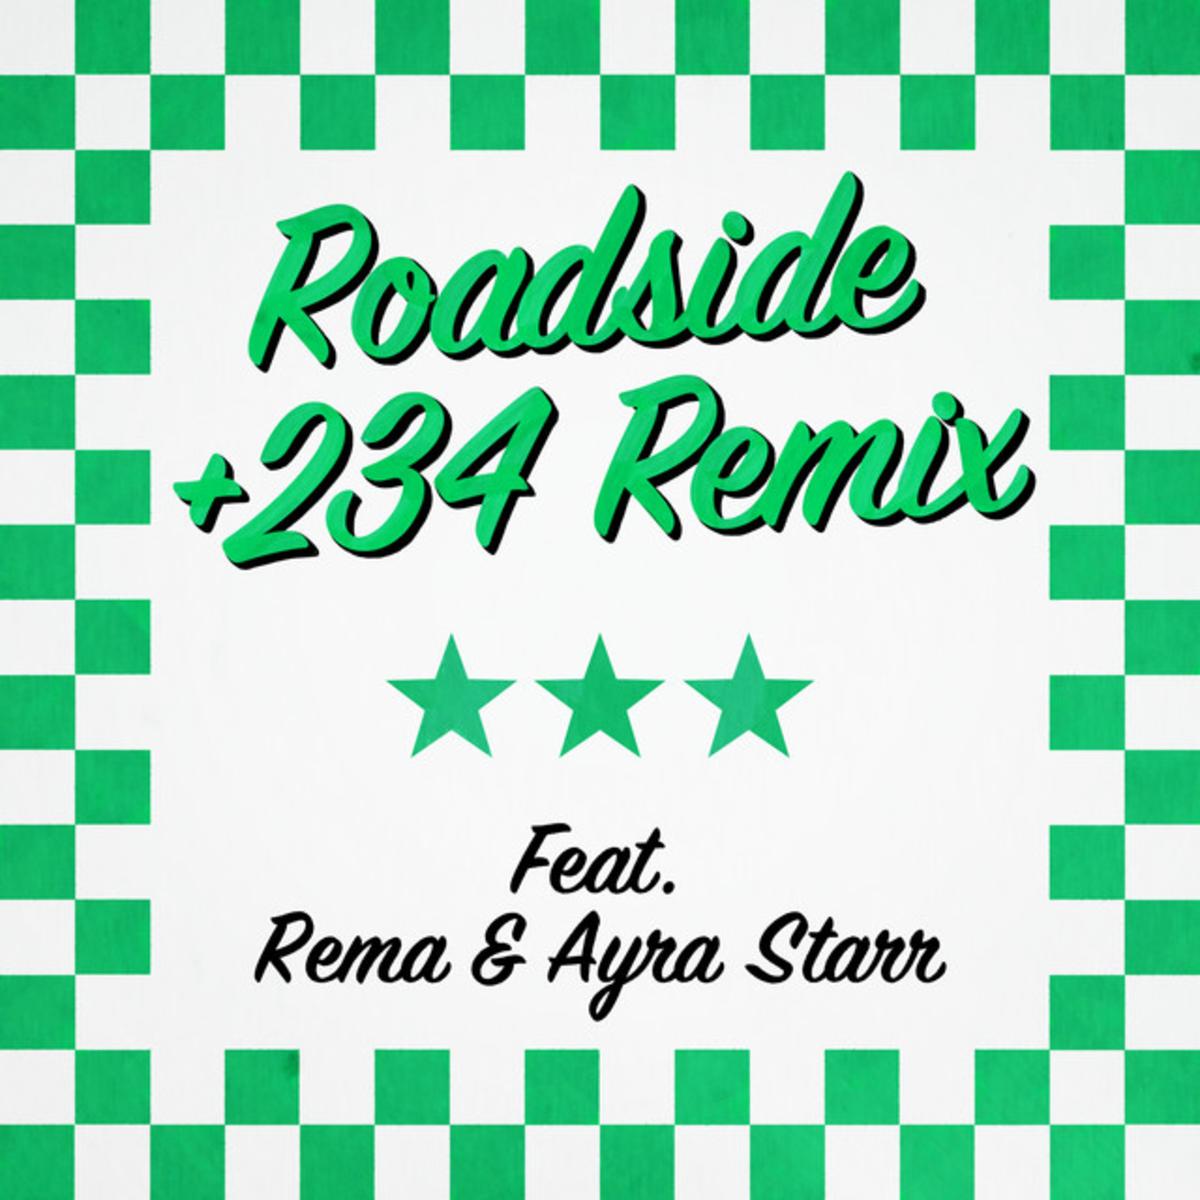 Mahalia - Roadside +234 (Remix) Ft Rema & Ayra Starr 4